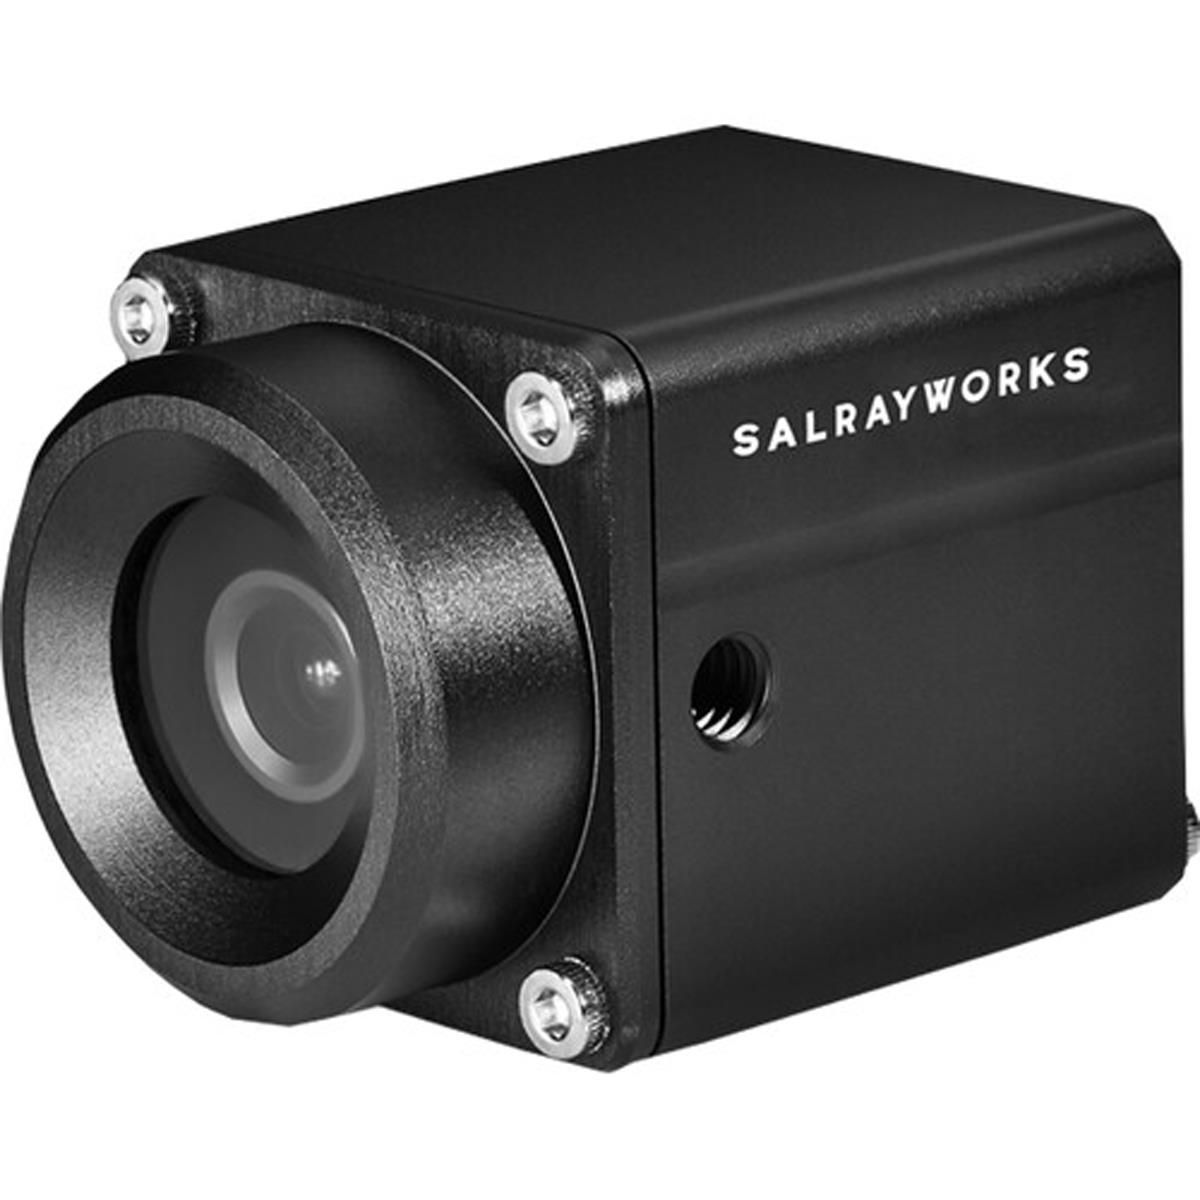 Image of Salrayworks raySHOT UltraLatency 1080p 1/2.8'' Exmor R CMOS Sensor POV Camera